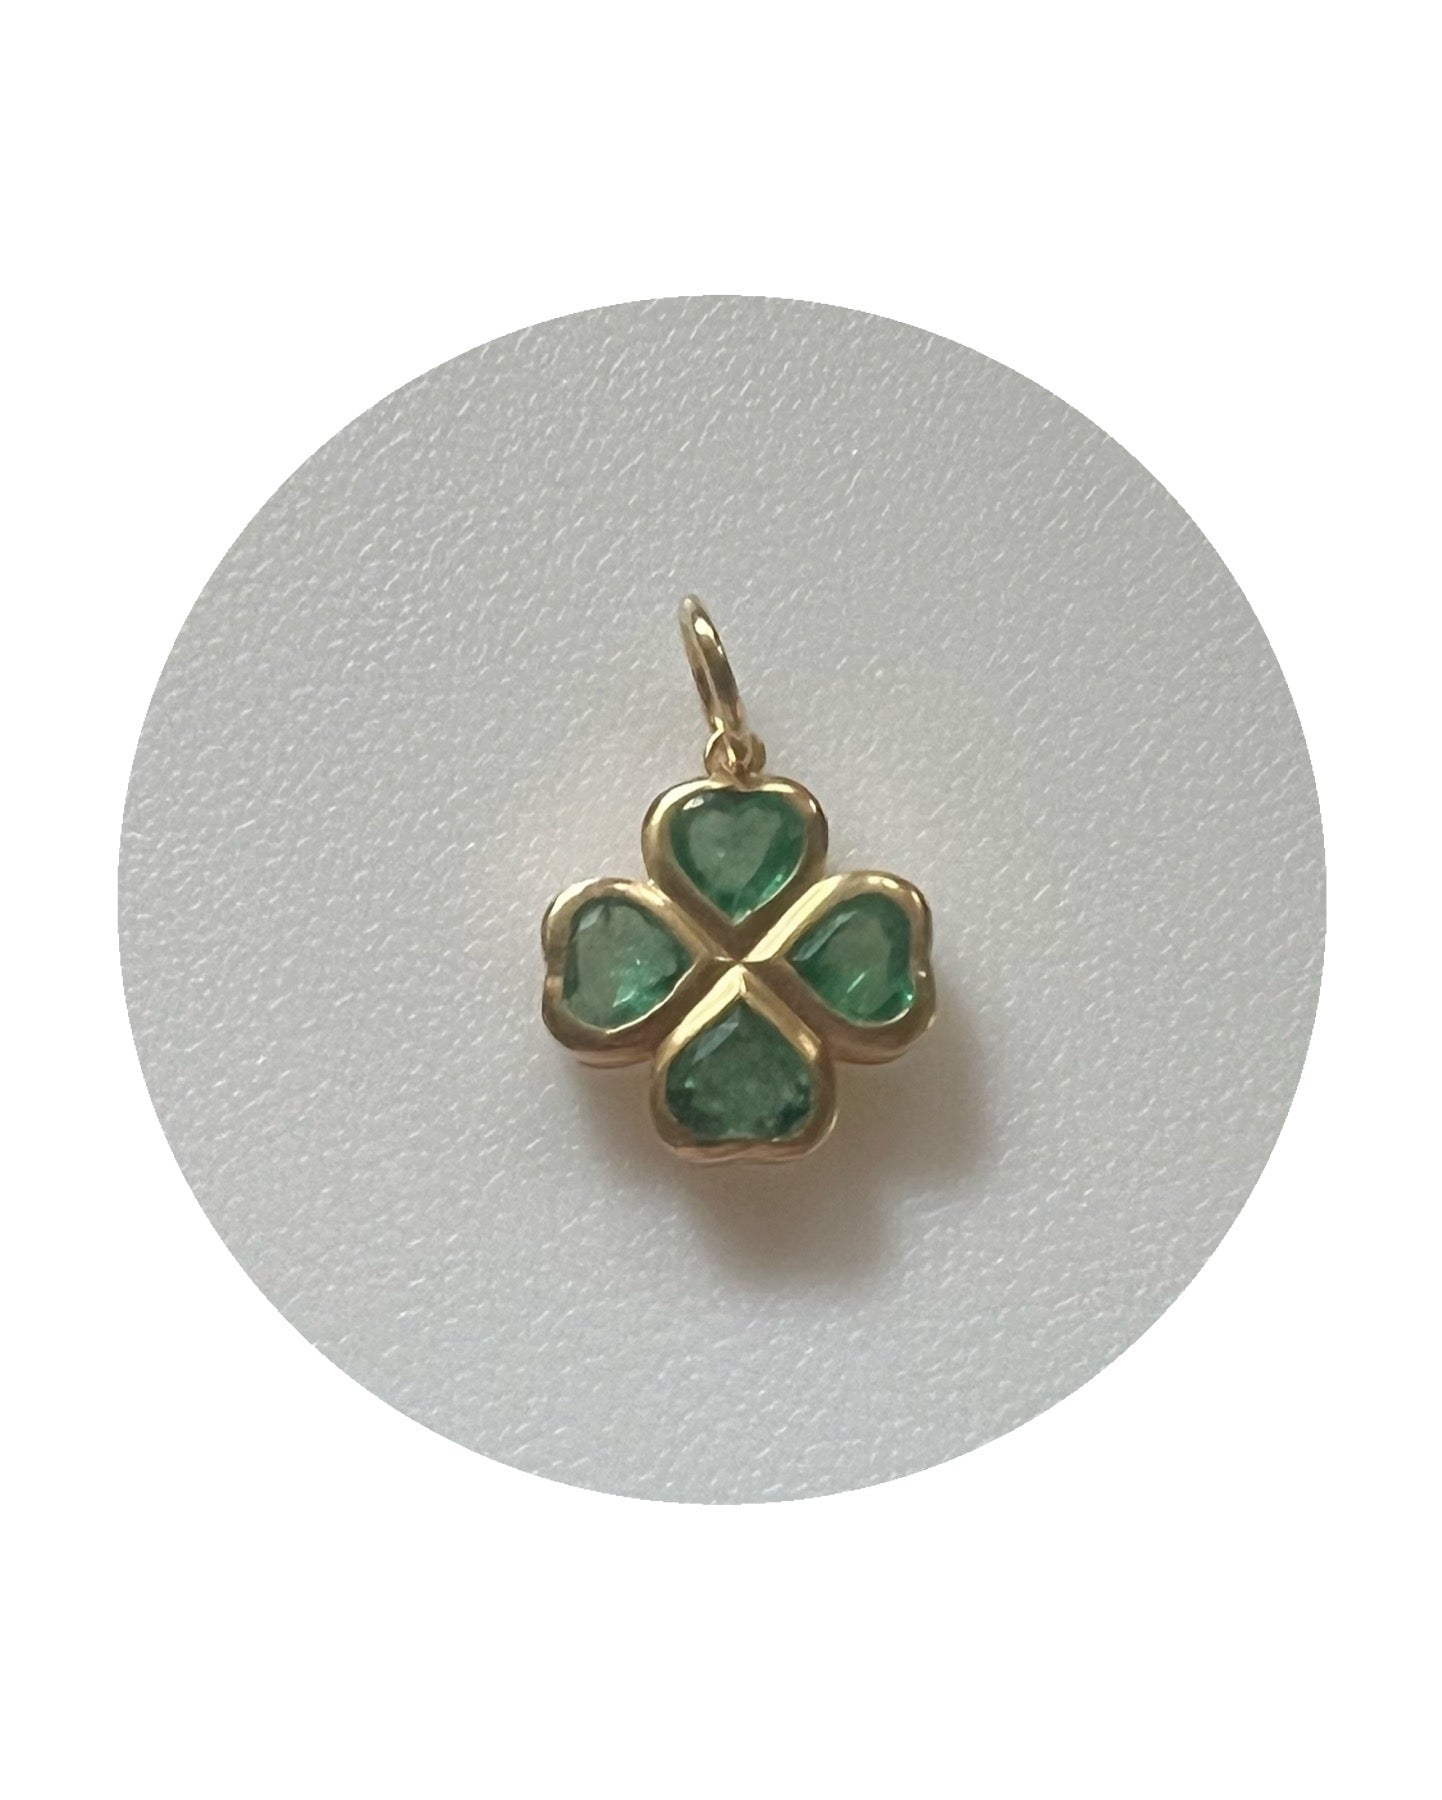 Emerald clover pendant